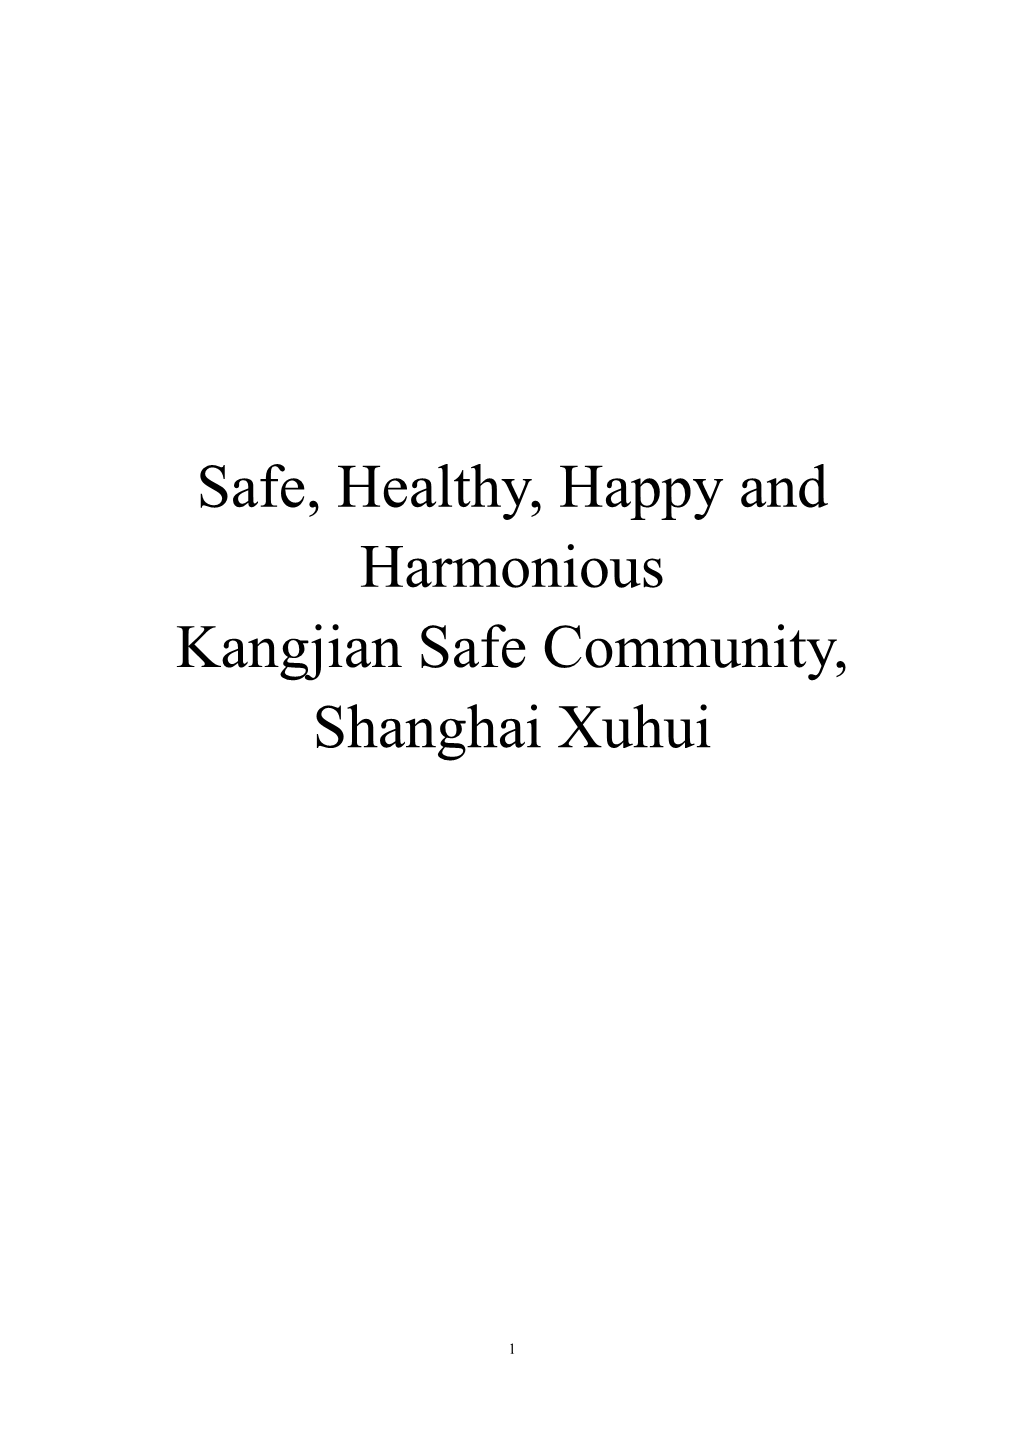 Safe, Healthy, Happy and Harmonious Kangjian Safe Community, Shanghai Xuhui